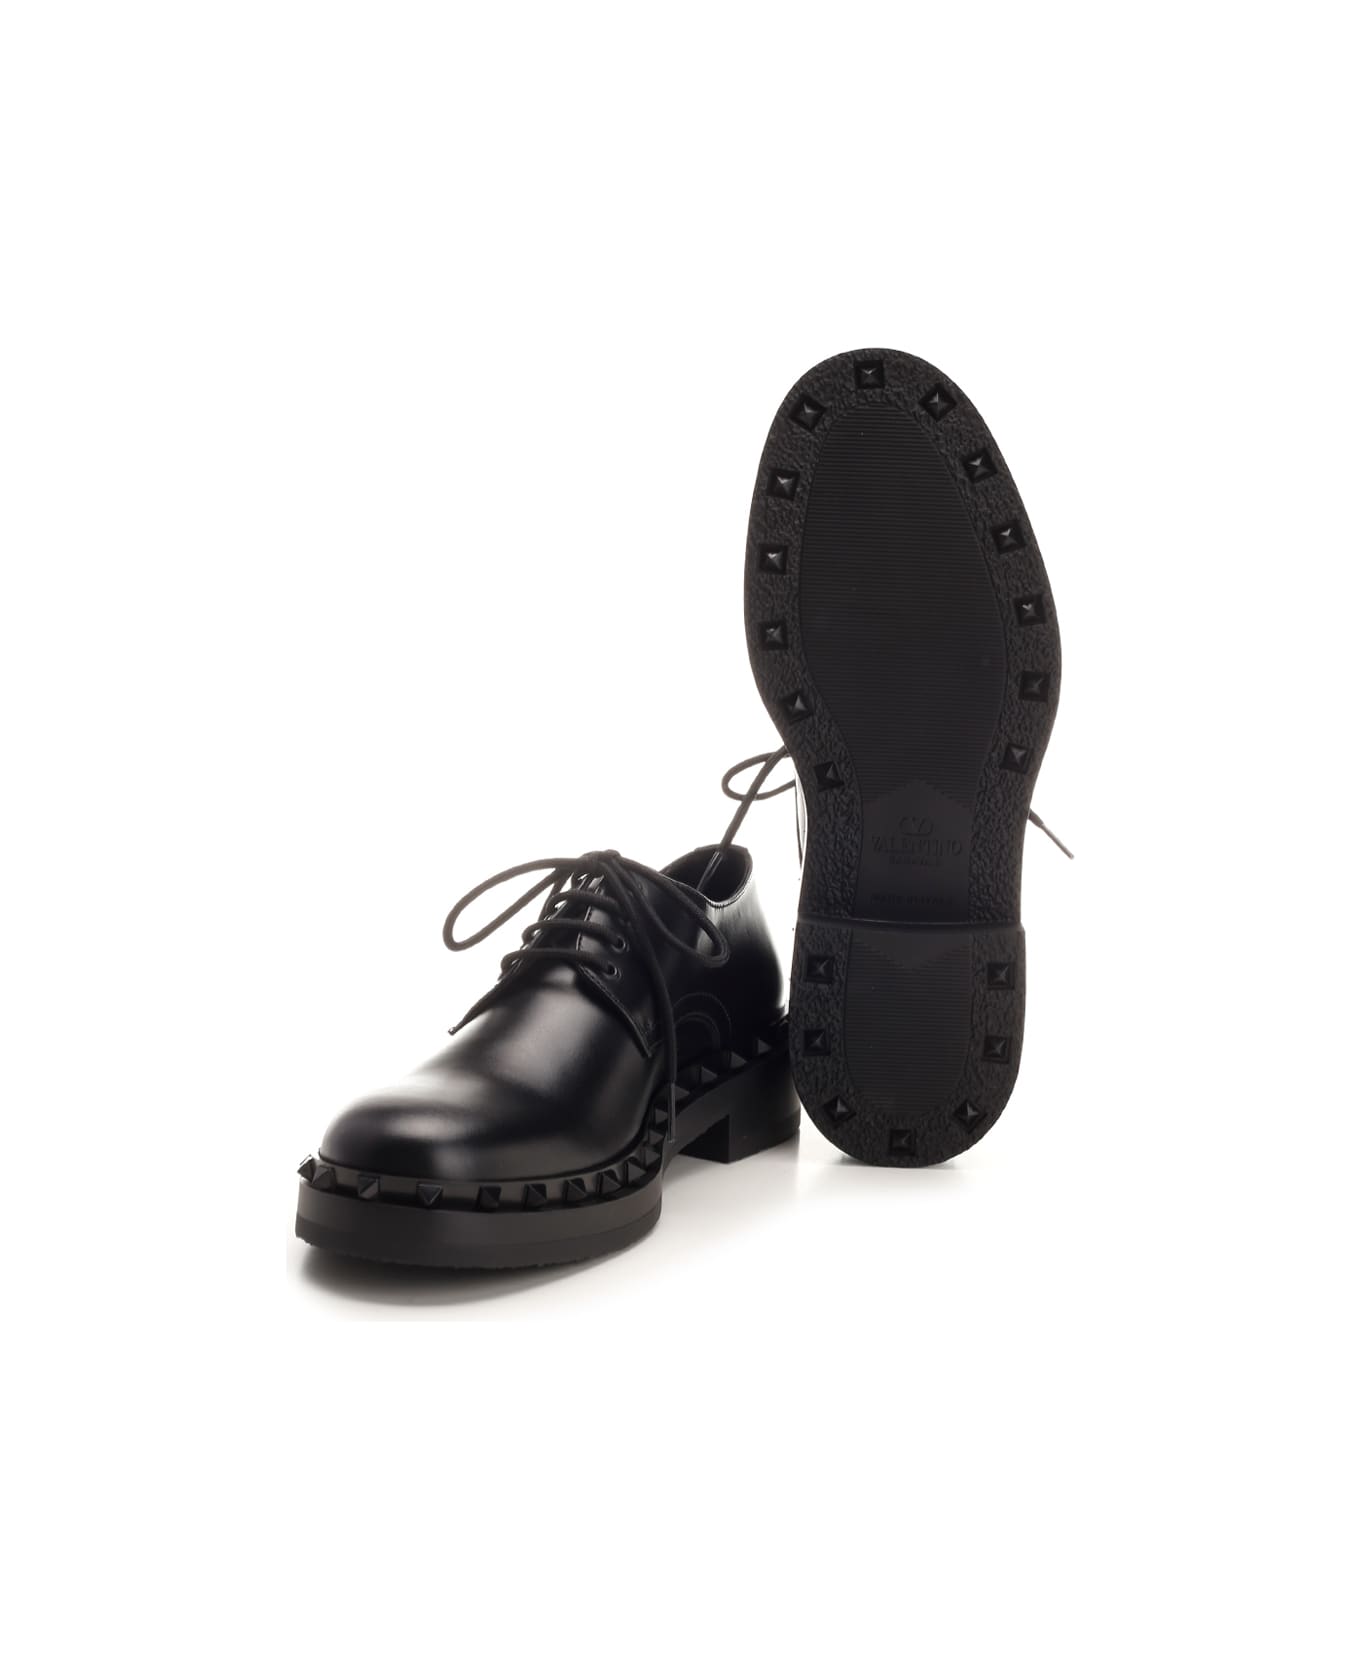 Valentino Garavani 'rockstud' Derby Shoes - Black